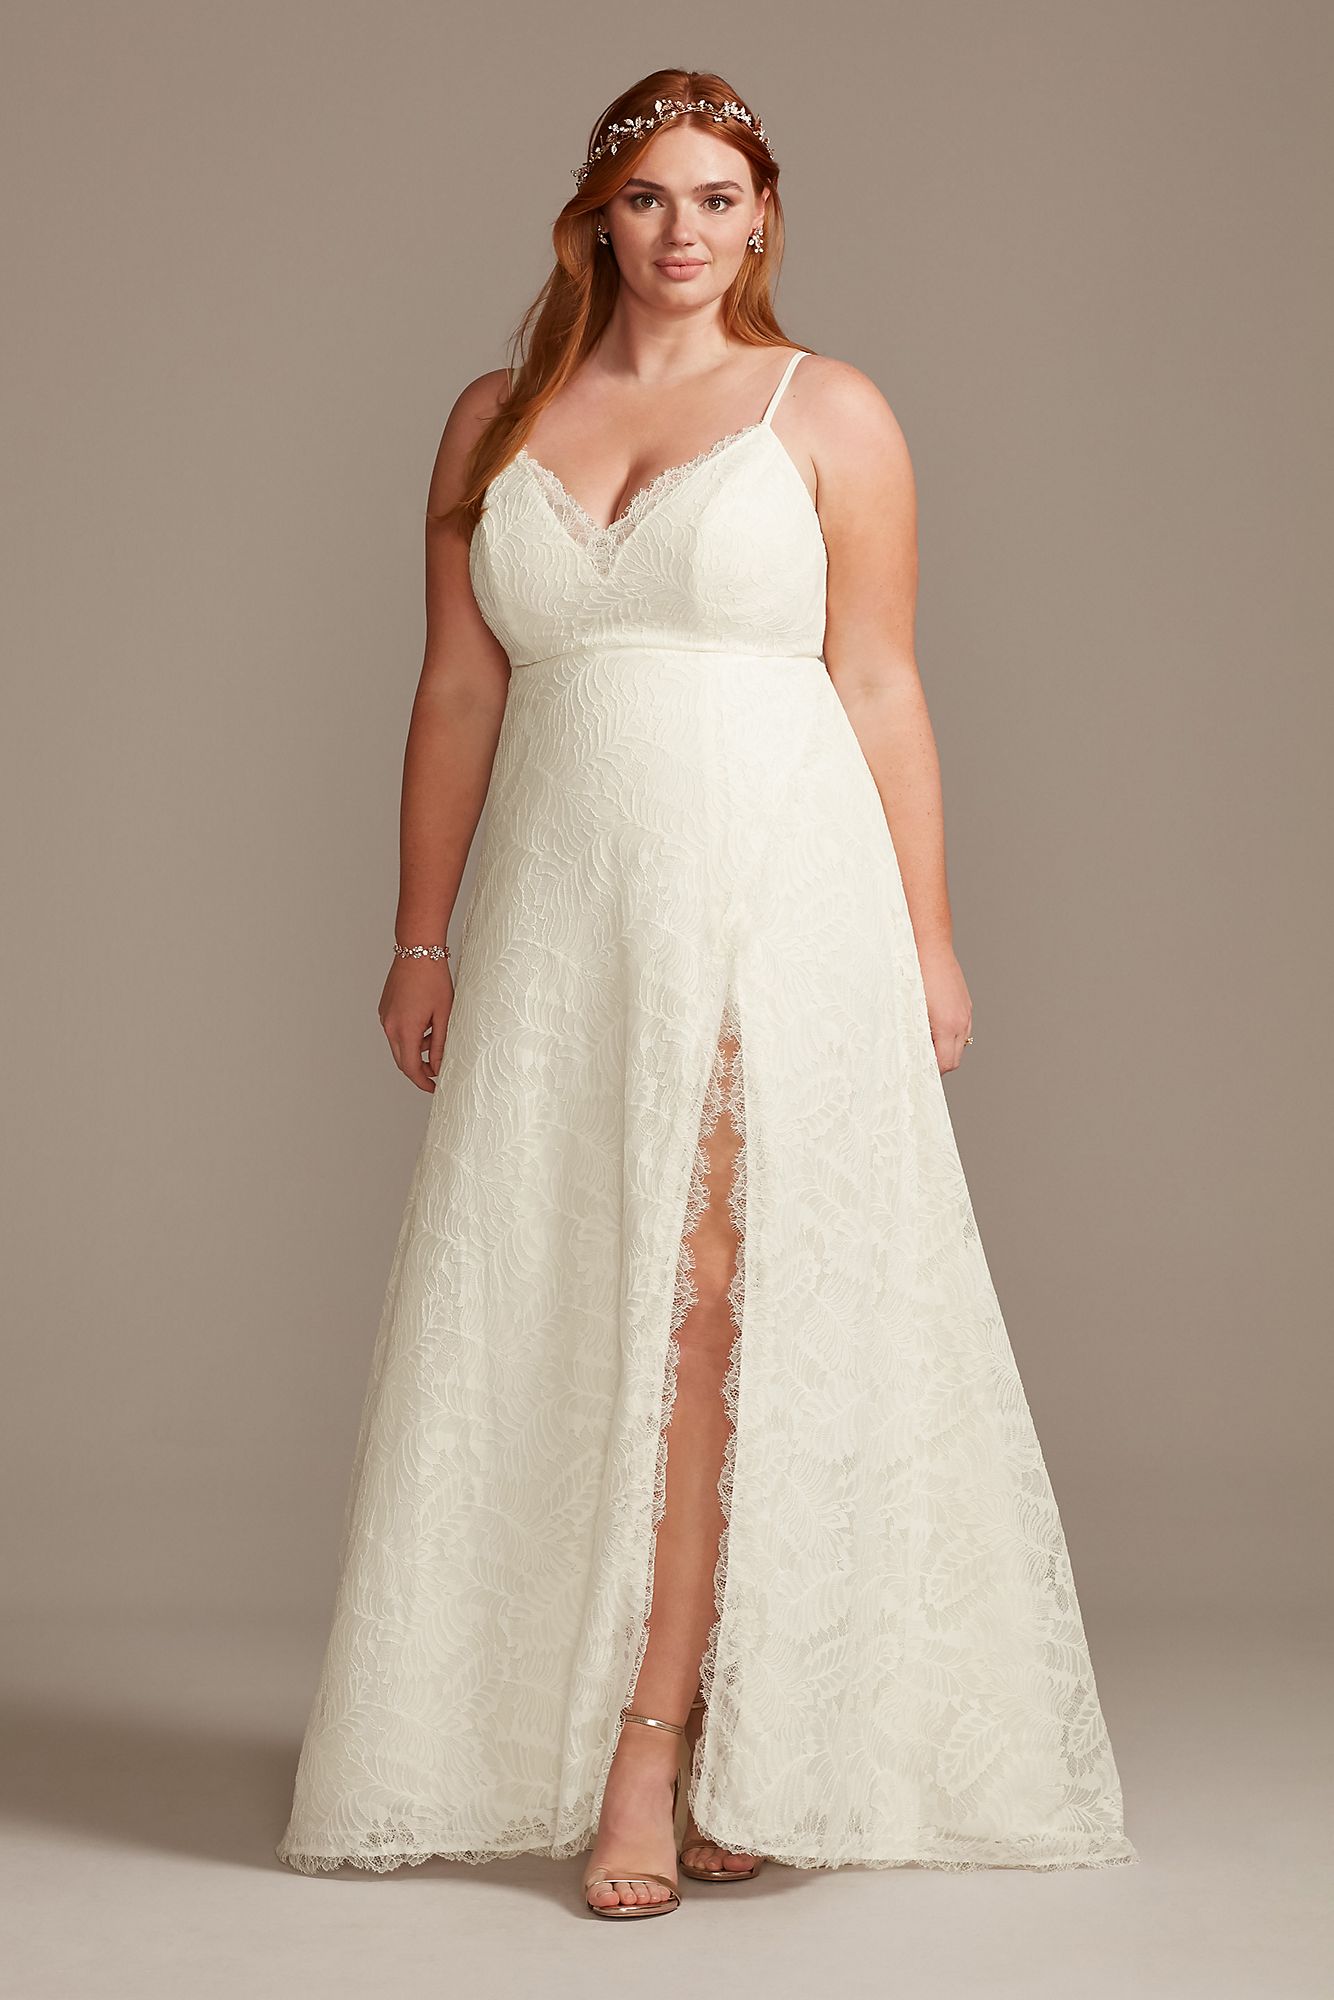 Leaf Pattern Lace A-Line Plus Size Wedding Dress 8MS251220